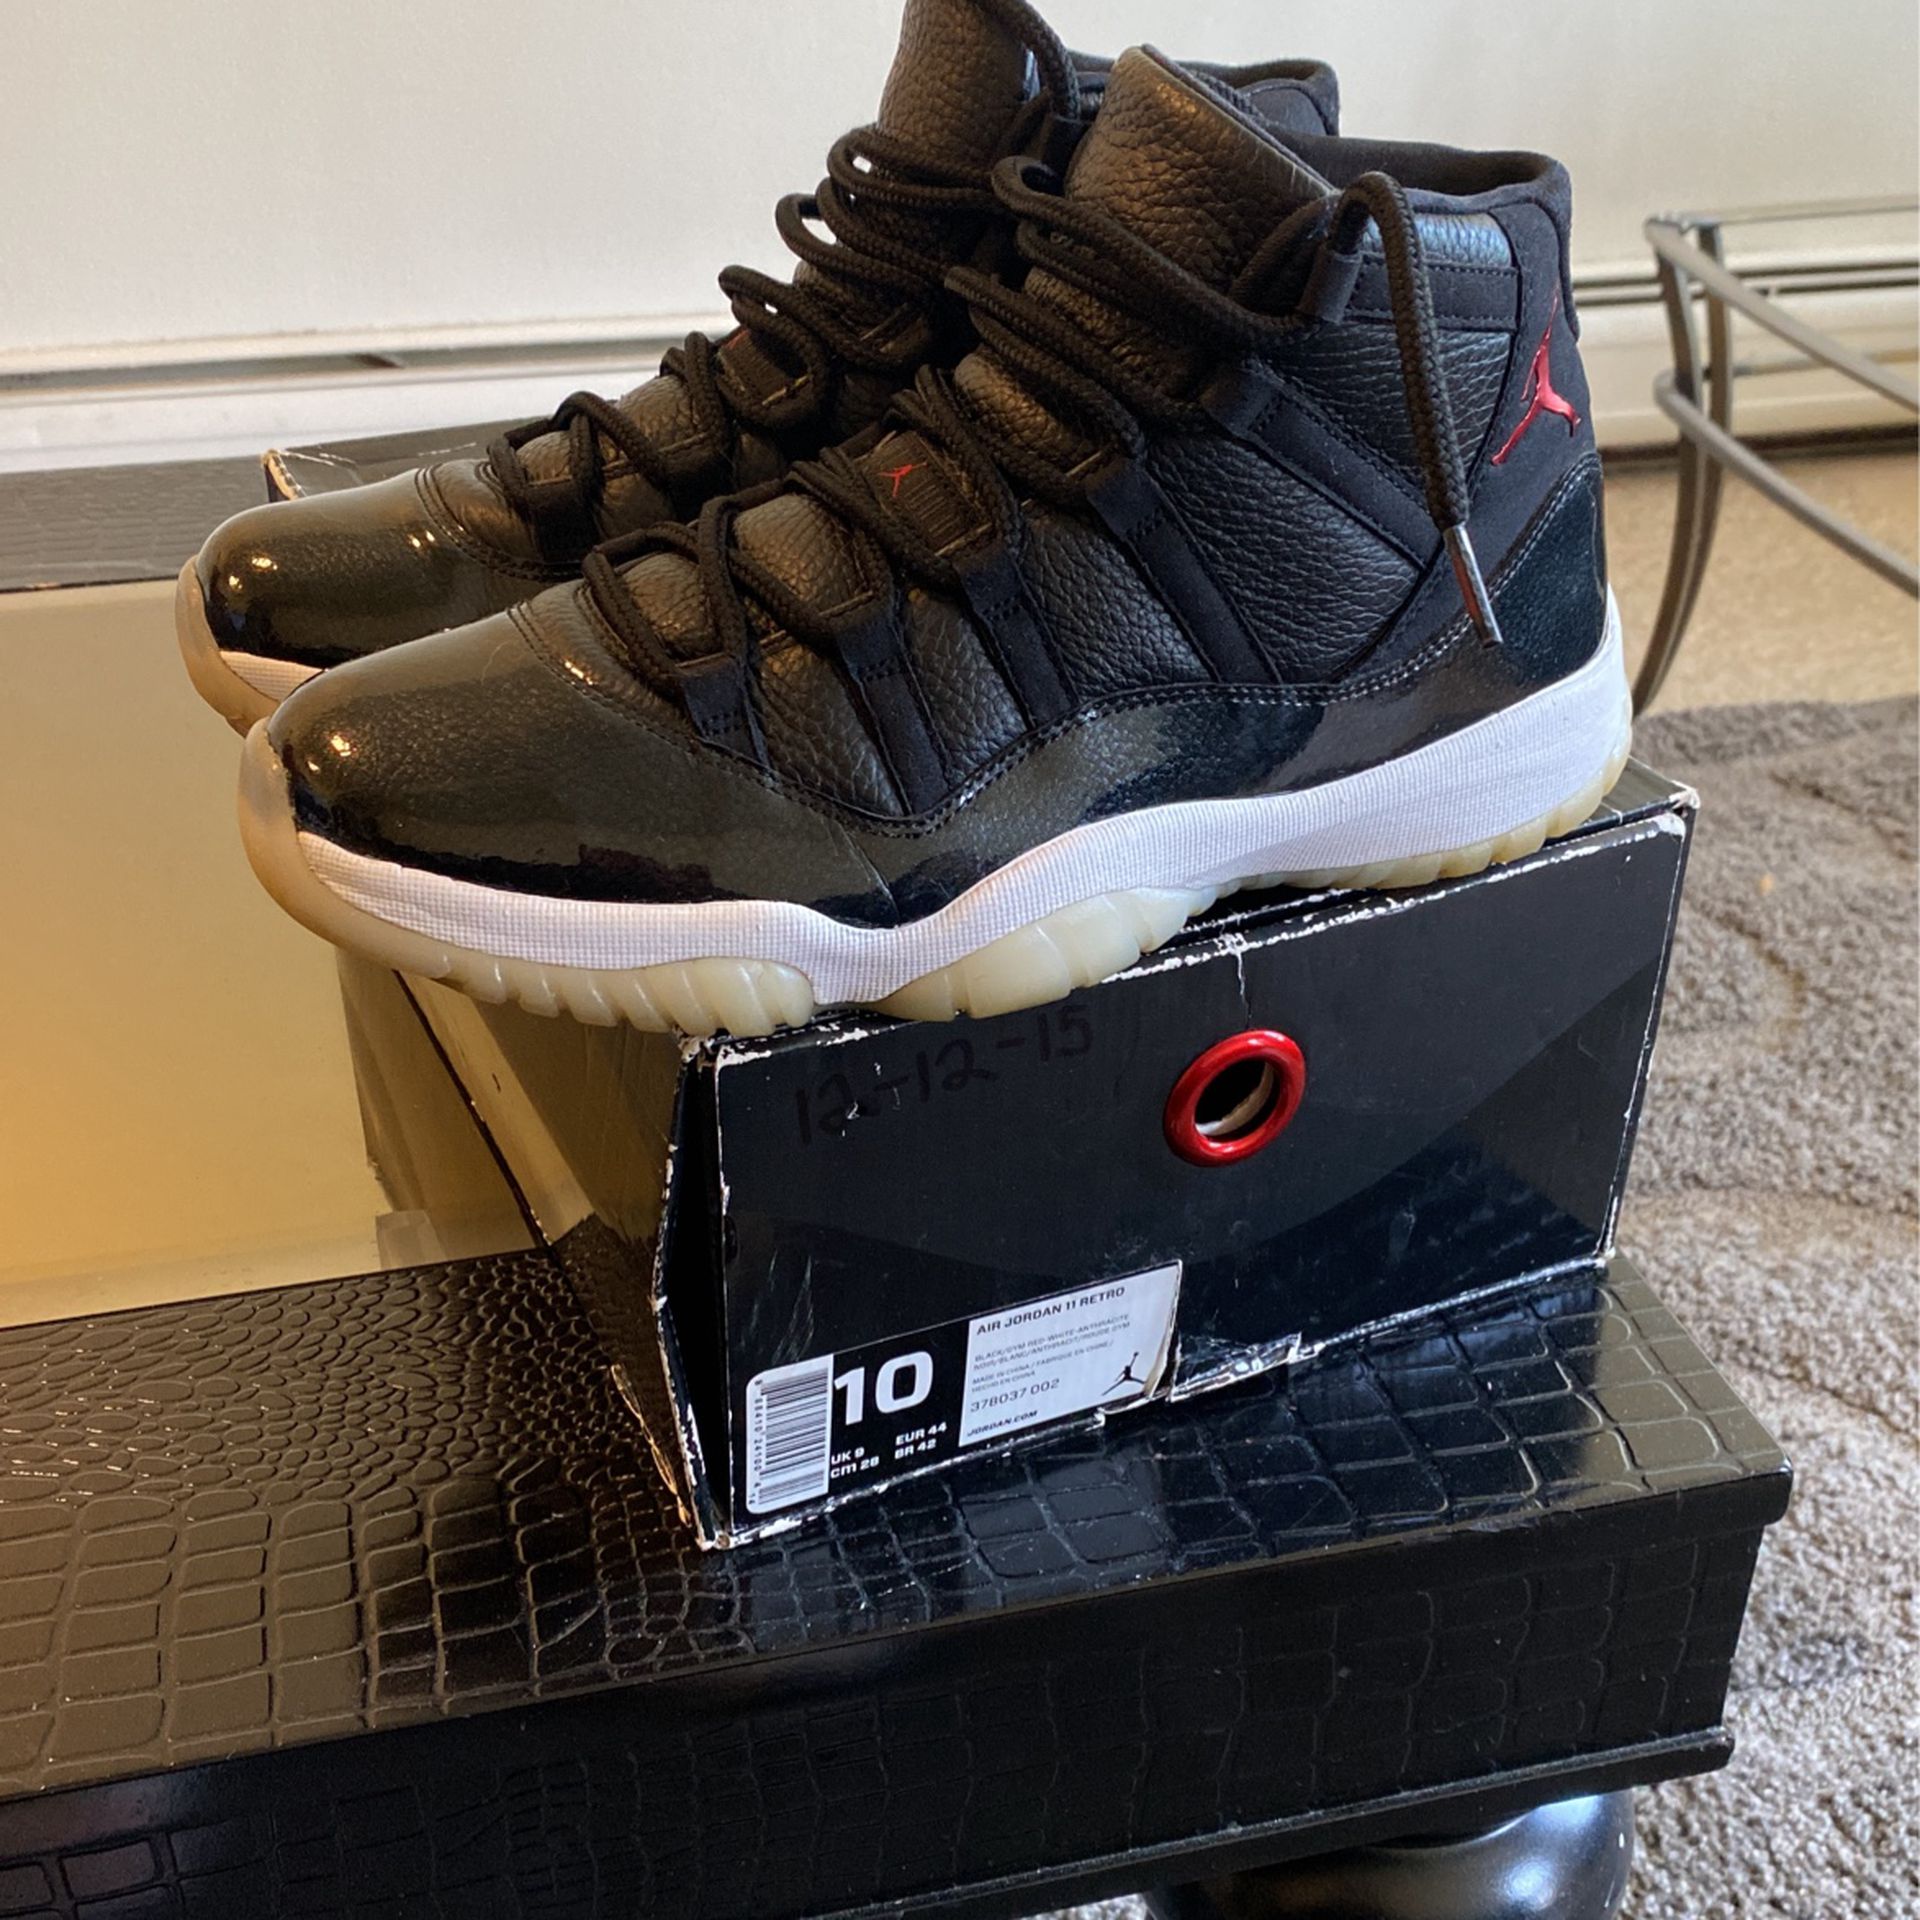 Jordan 72-10 Size 10 For $70